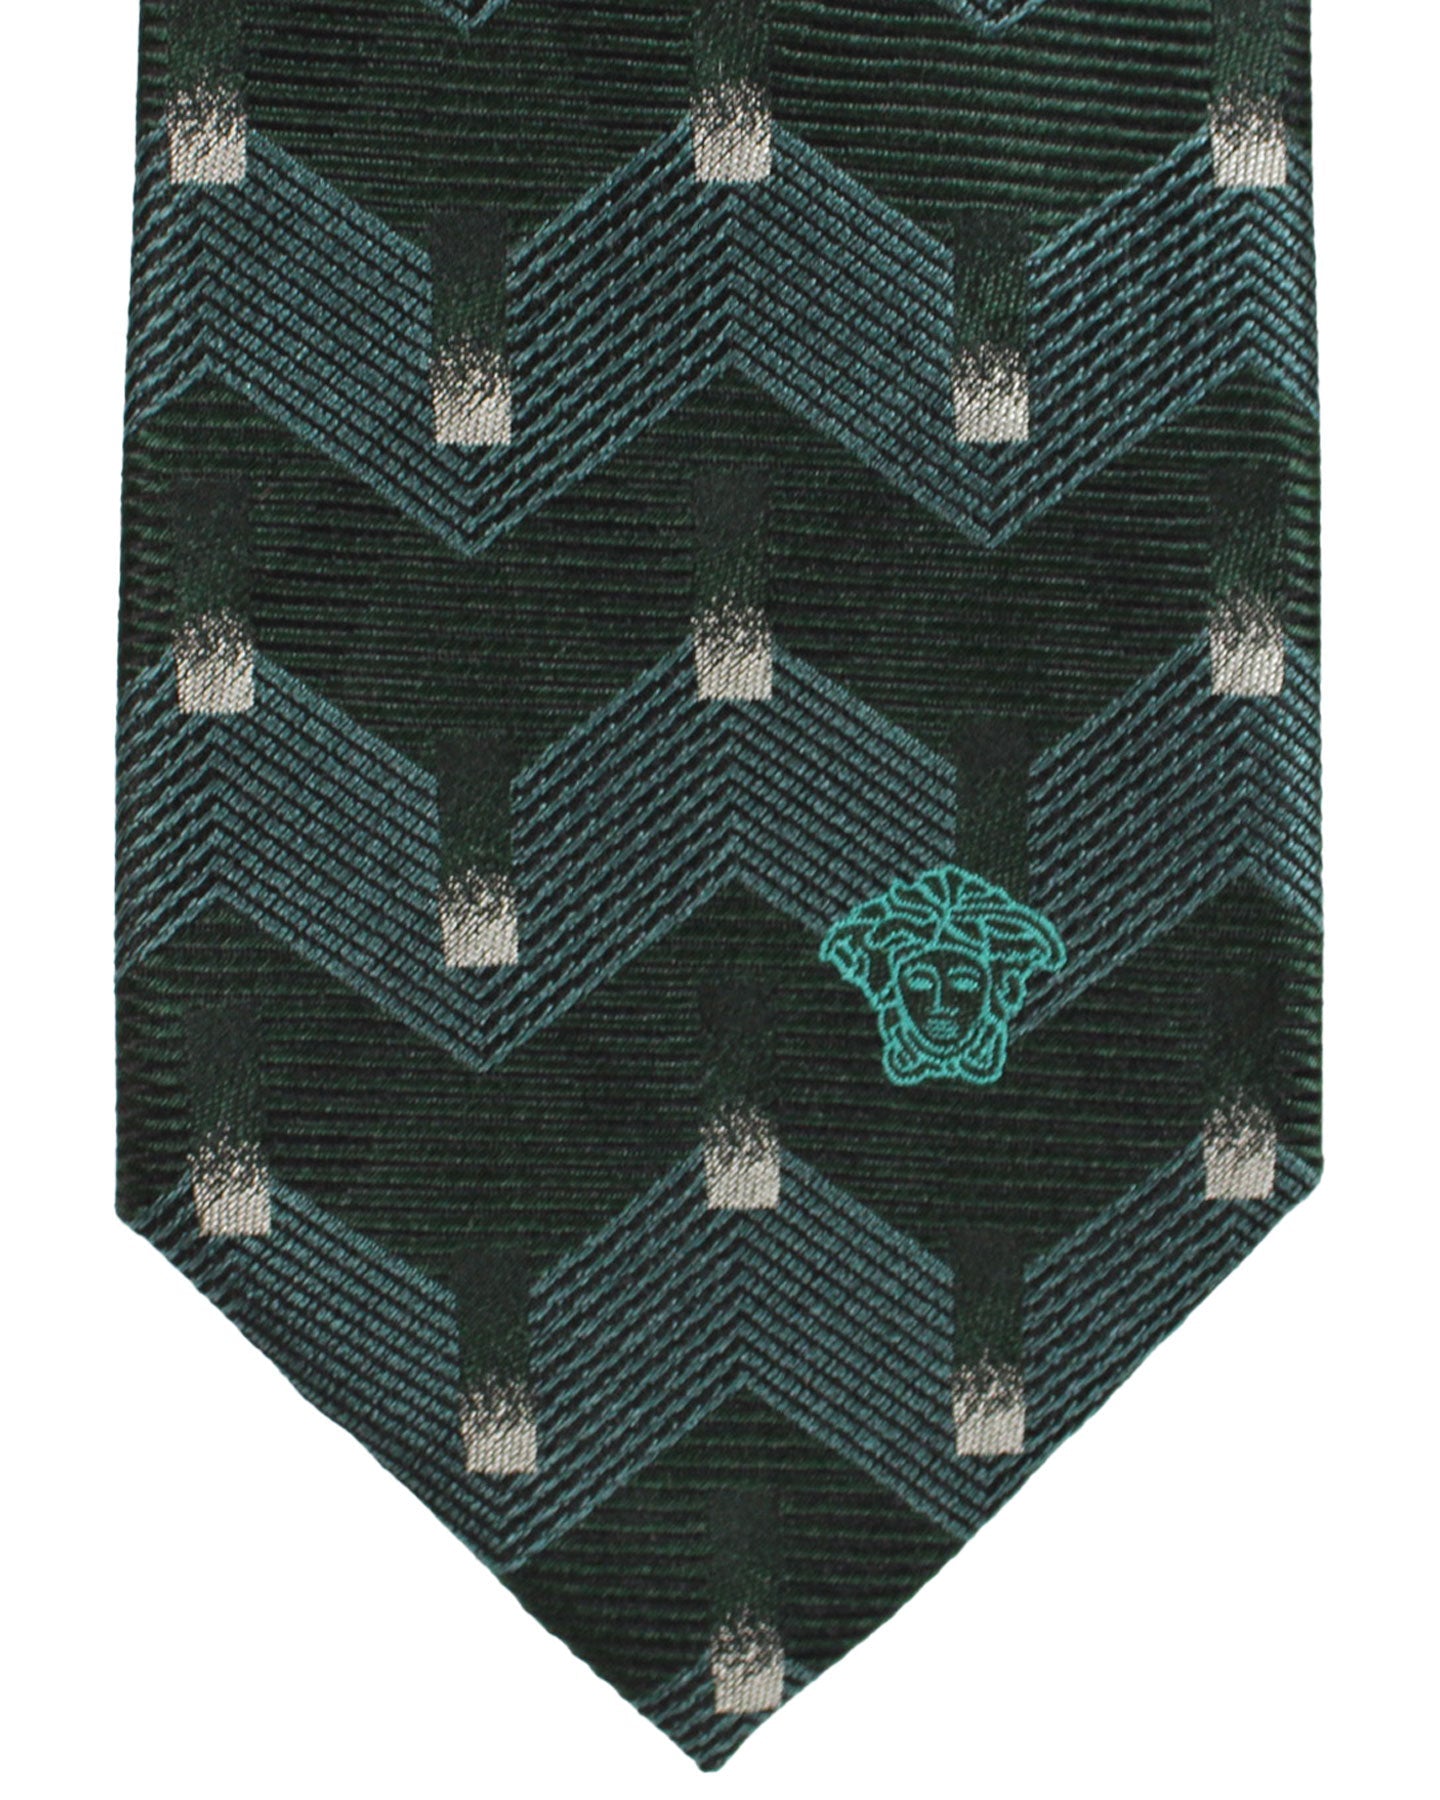 Versace Silk Tie Teal Geometric Medusa